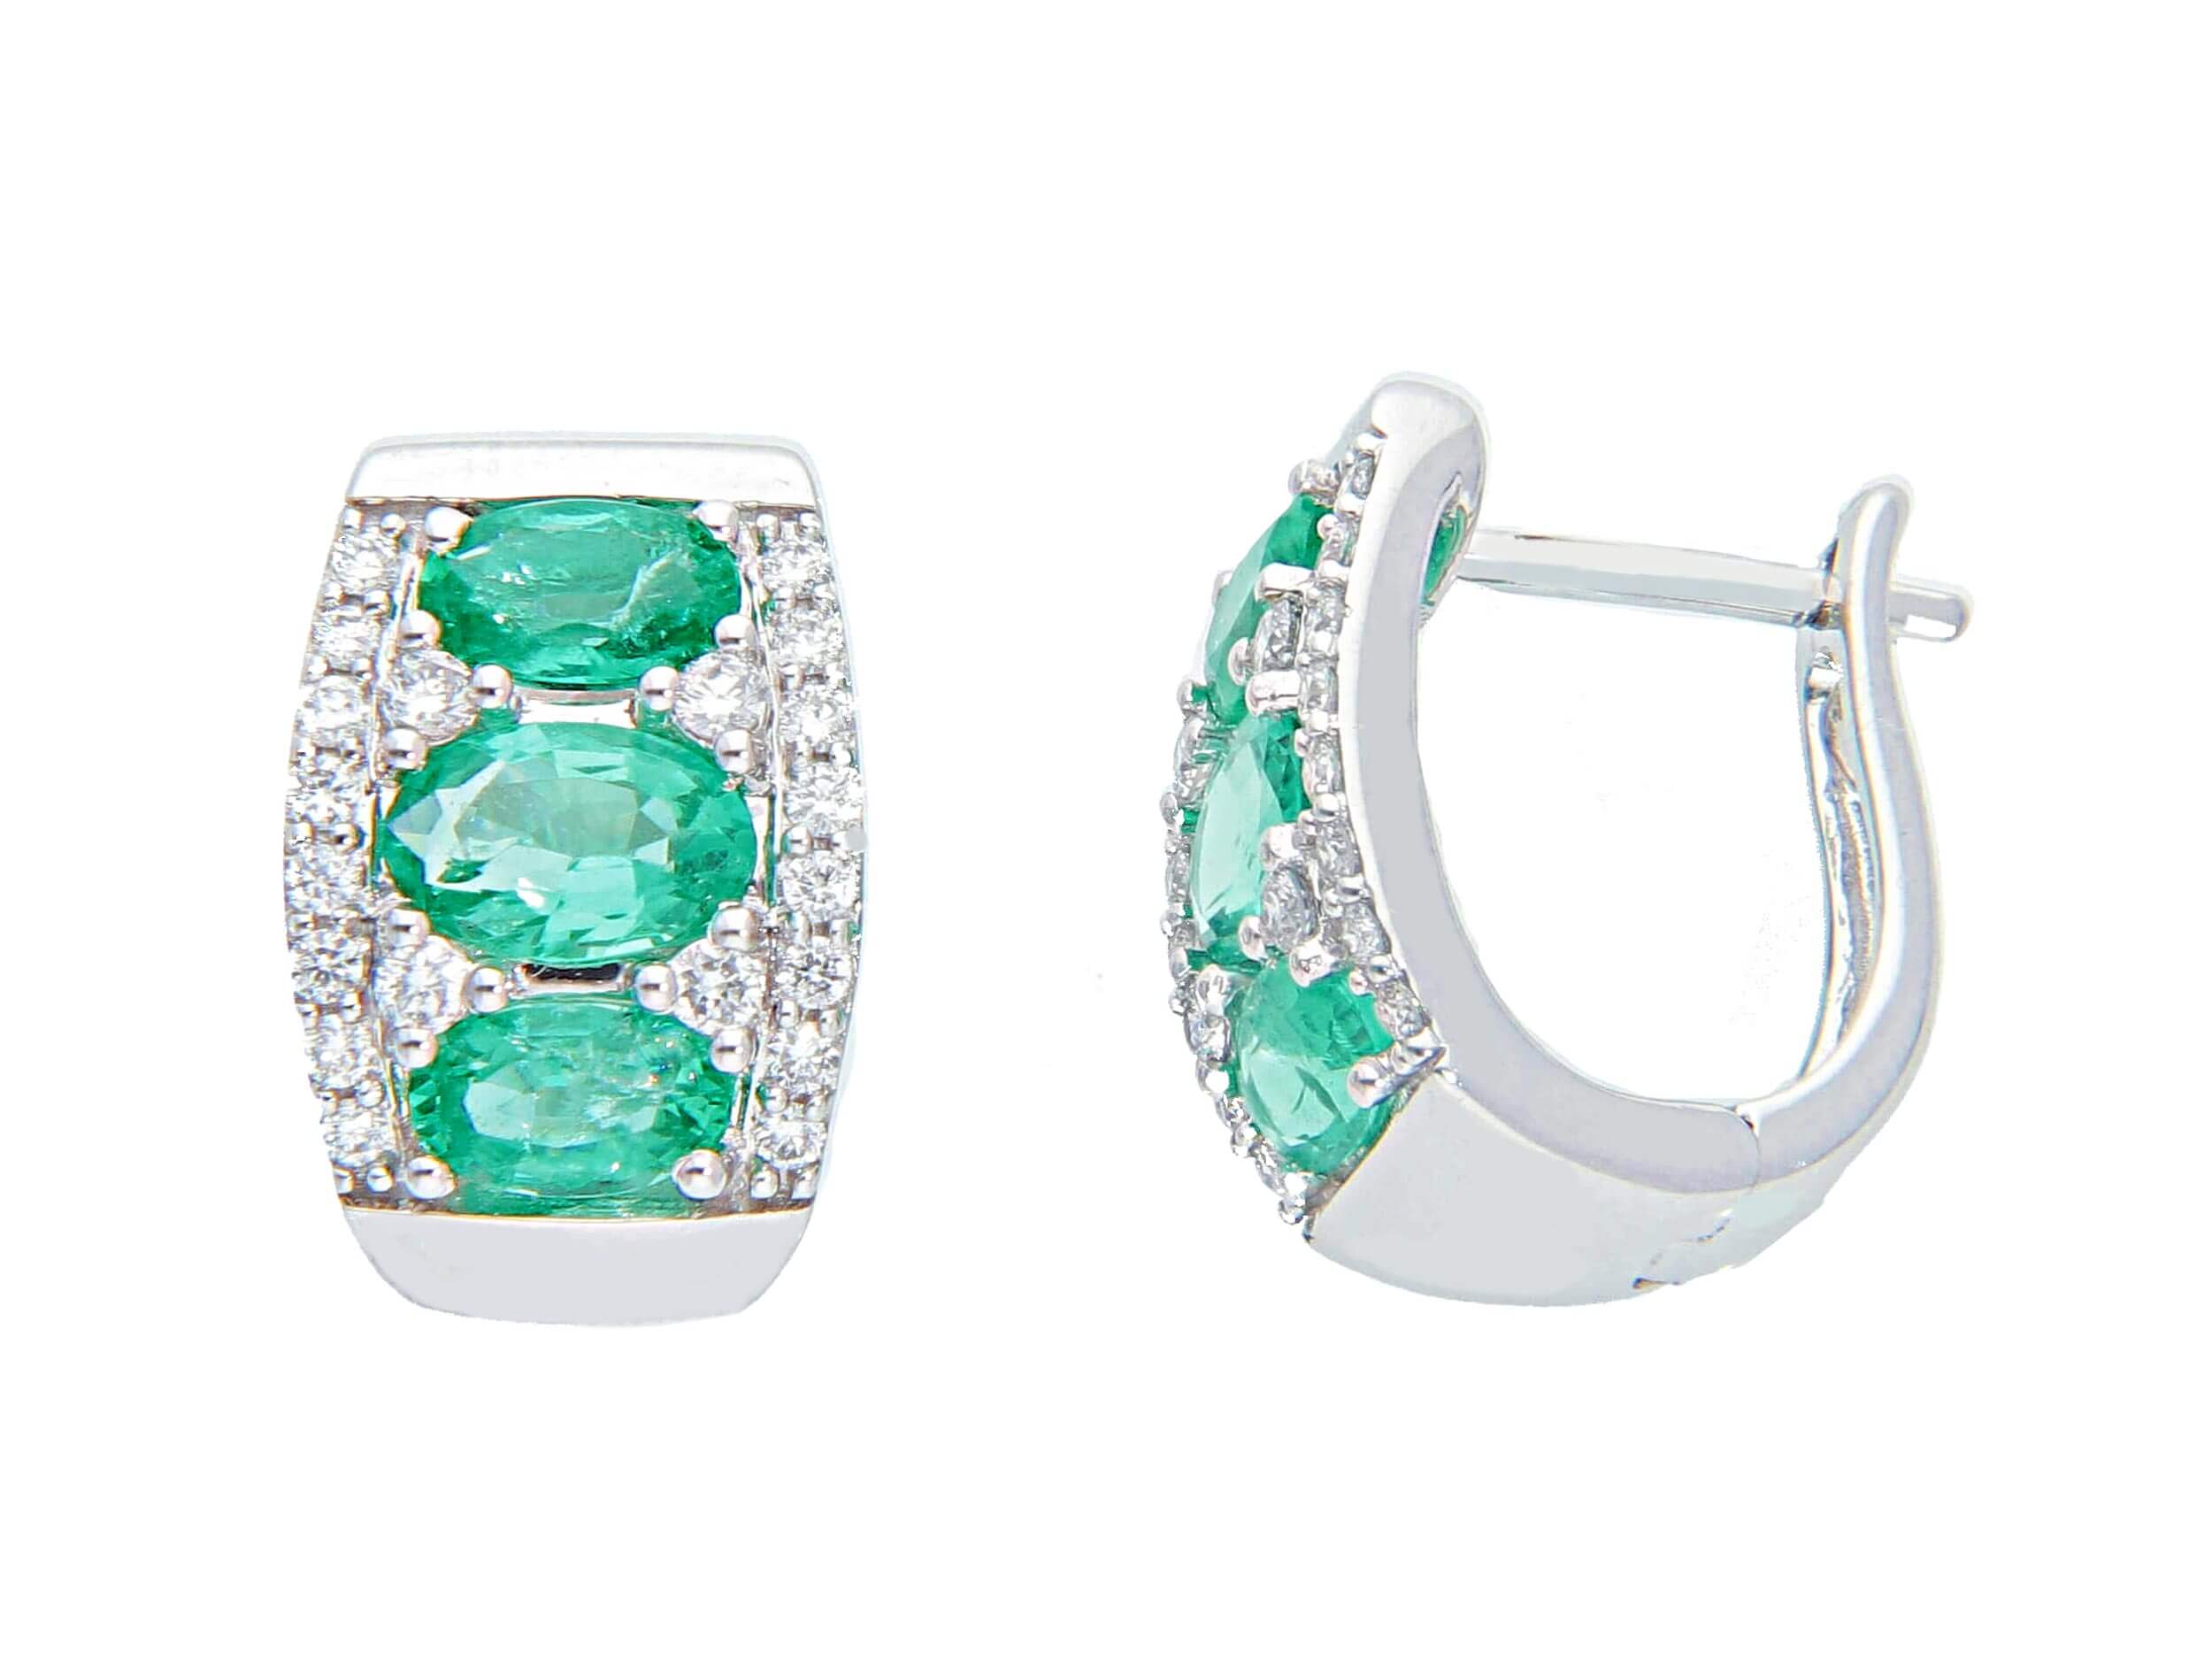 Emerald earrings 750% white gold and diamonds Art. 234414